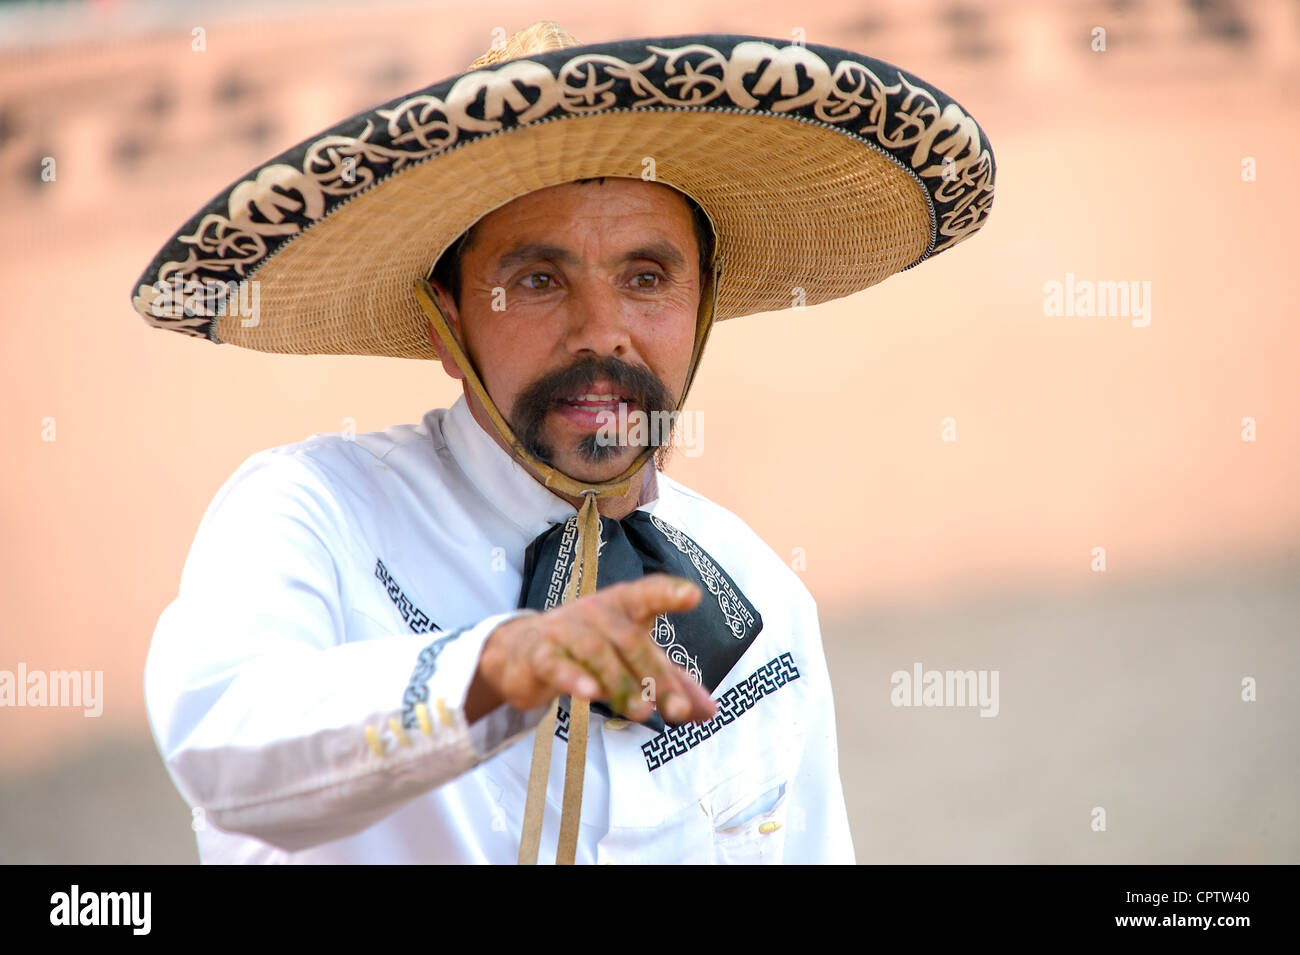 Mexican charro (horseman) pointing during a break in a charreada, San Antonio, TX, US Stock Photo